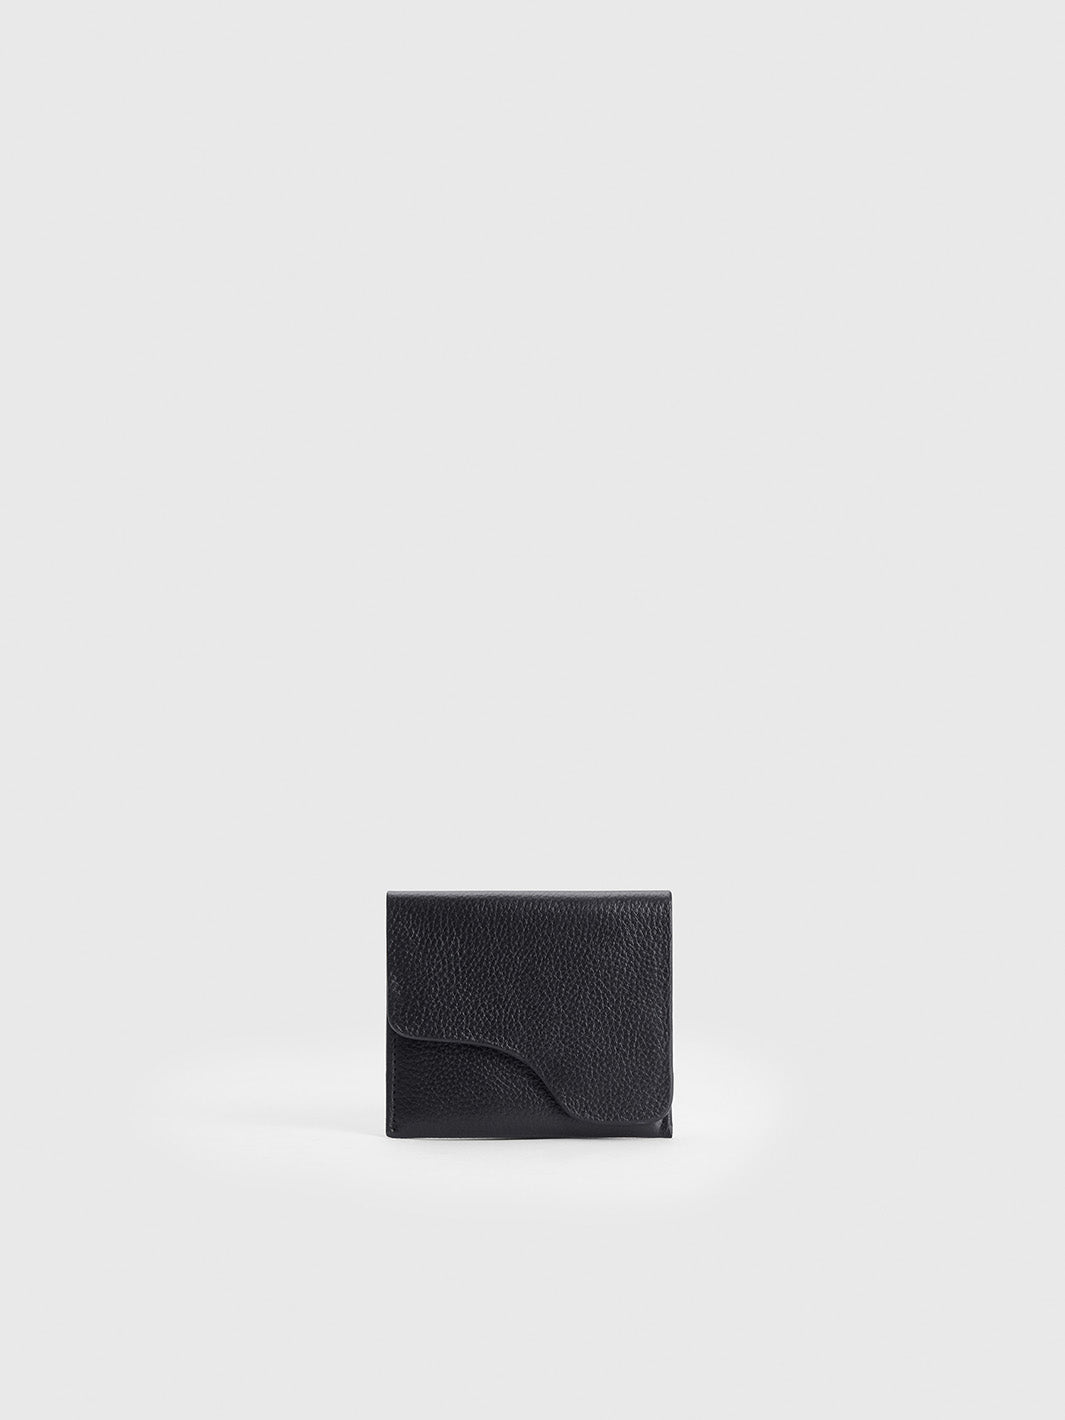 Olba Black Grained leather Wallet